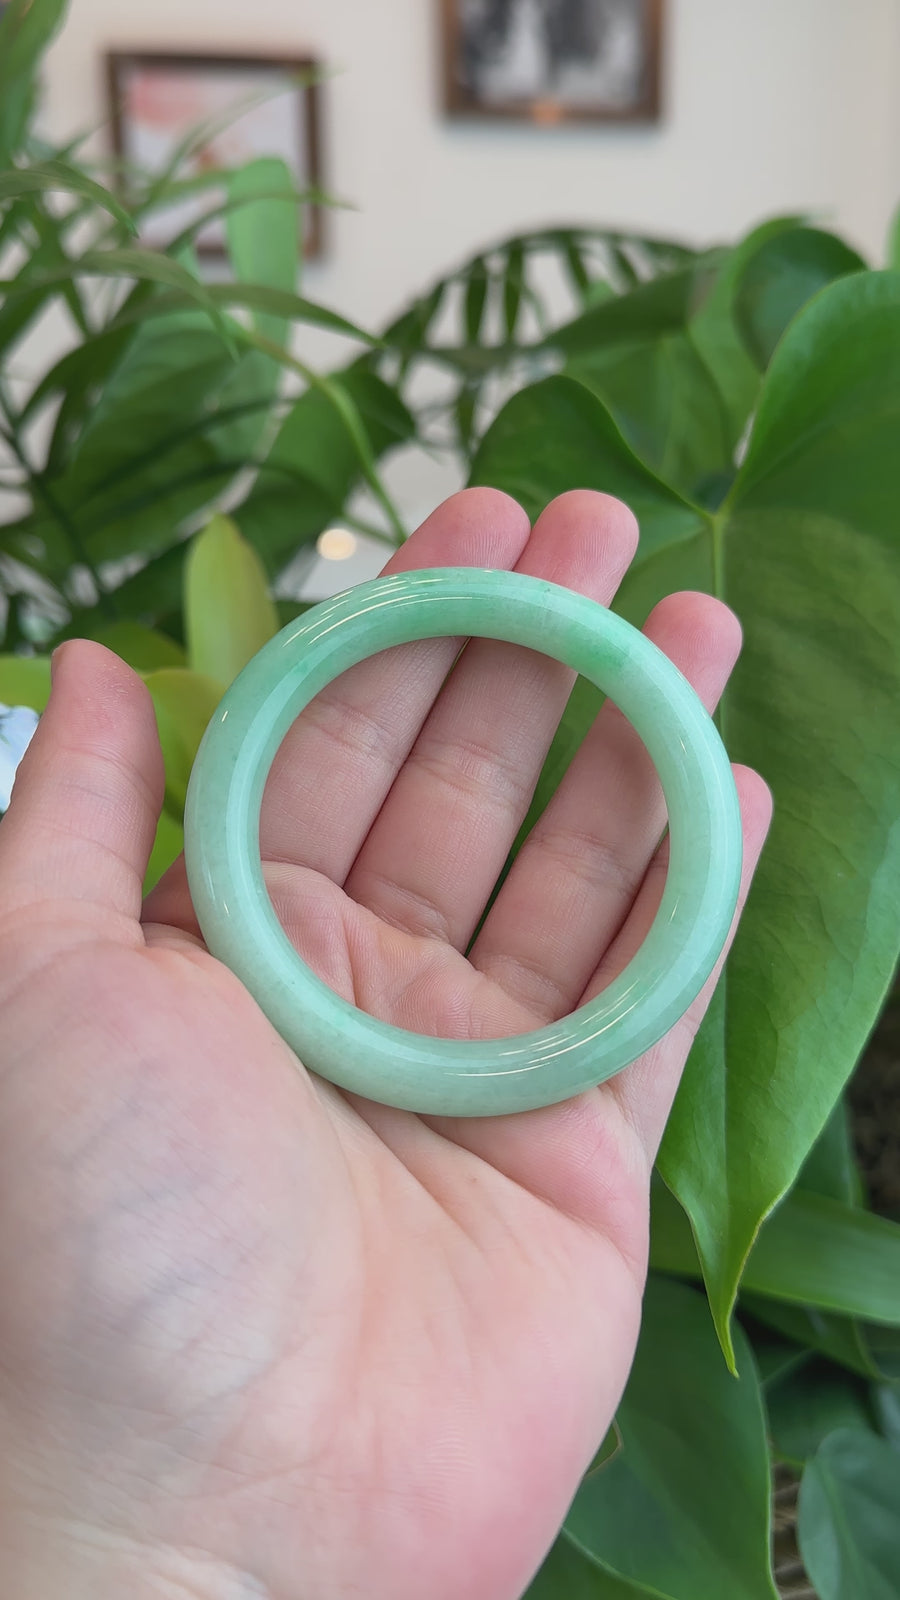 Natural Burmese Apple Green Jadeite Jade Bangle Bracelet (52.59mm) #T048